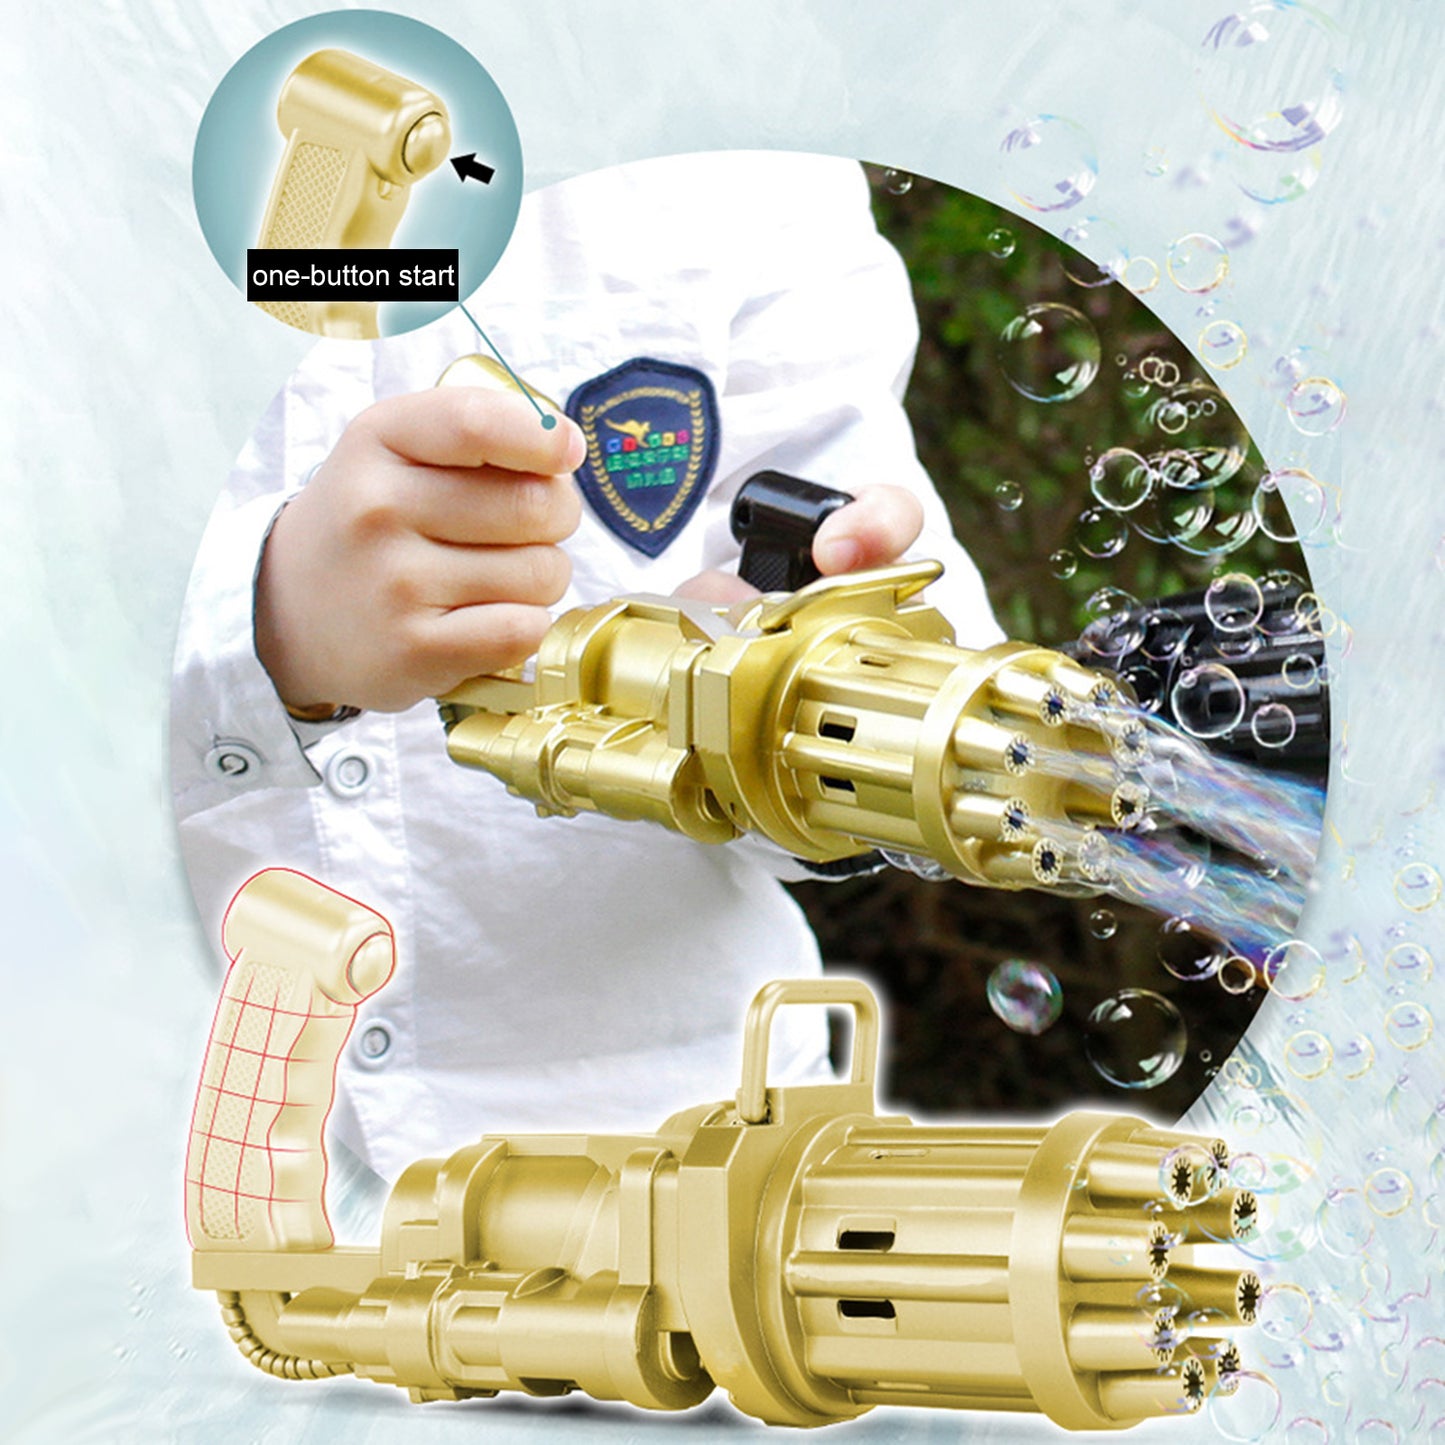 Electric Bubble Gun Plastic Machine Toys For Kids (PD)